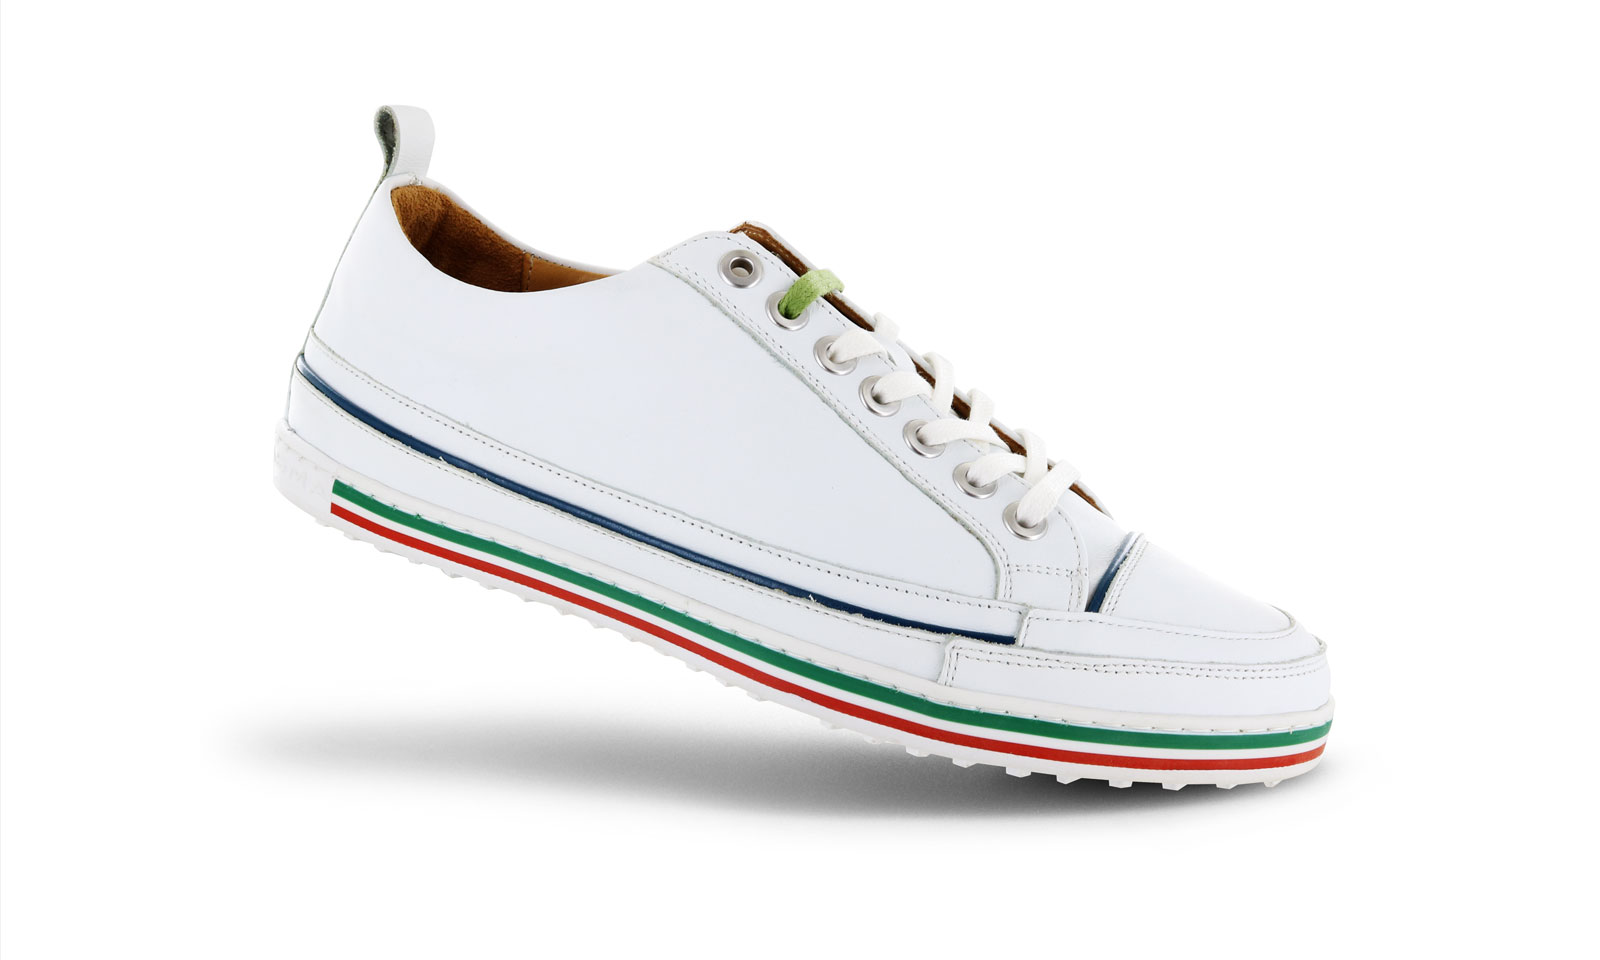 Italian casual golf shoe